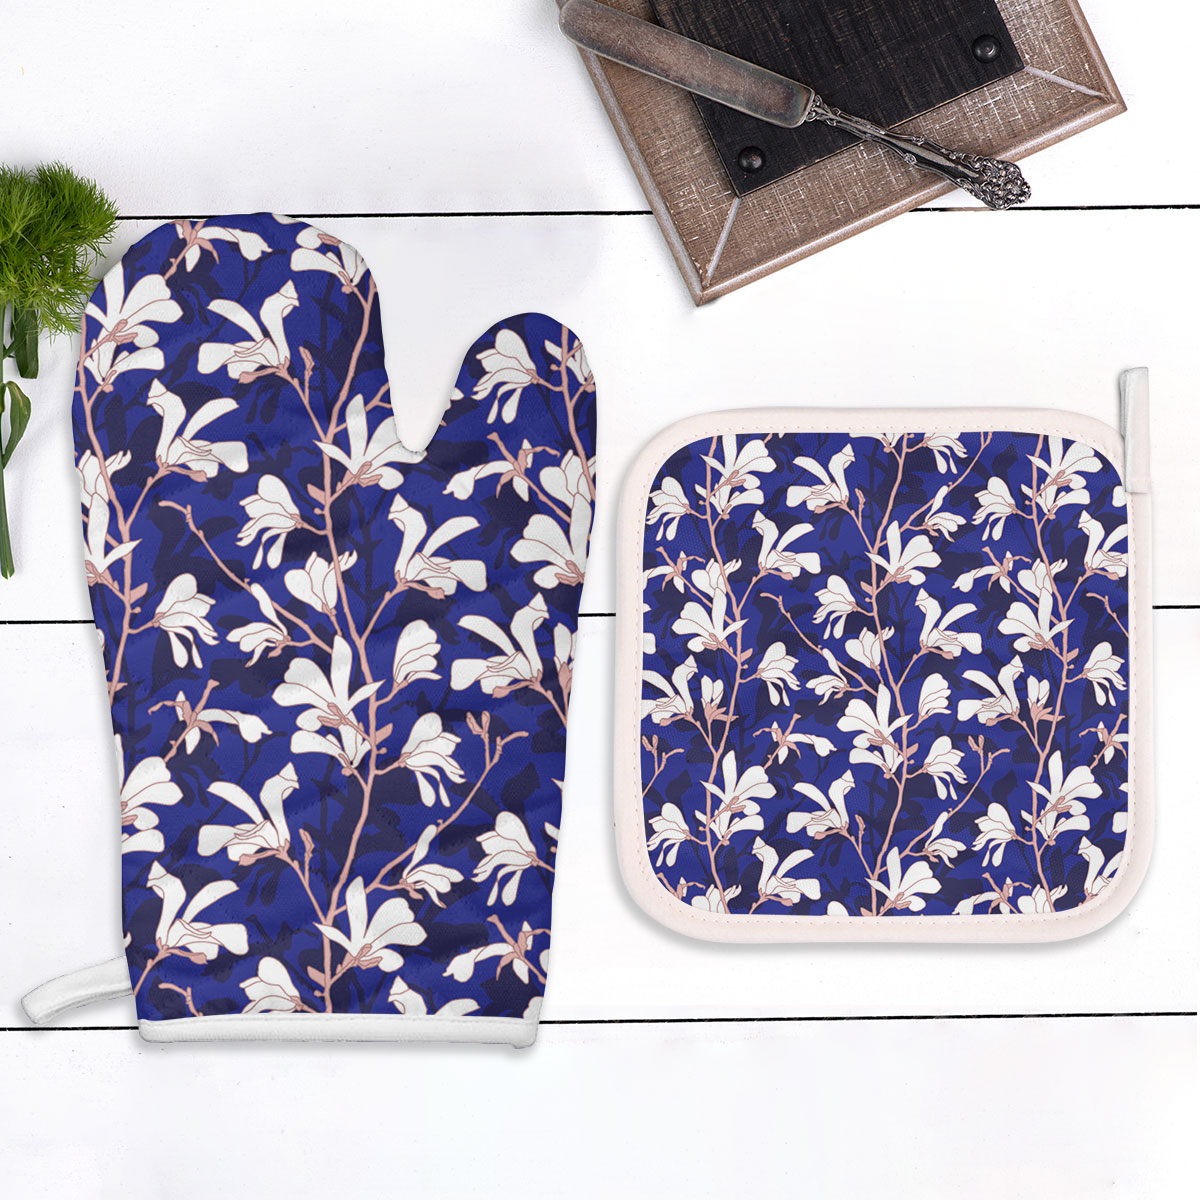 Blue Floral Background With White Magnolia Flower Oven Mitts Pot Holder Set